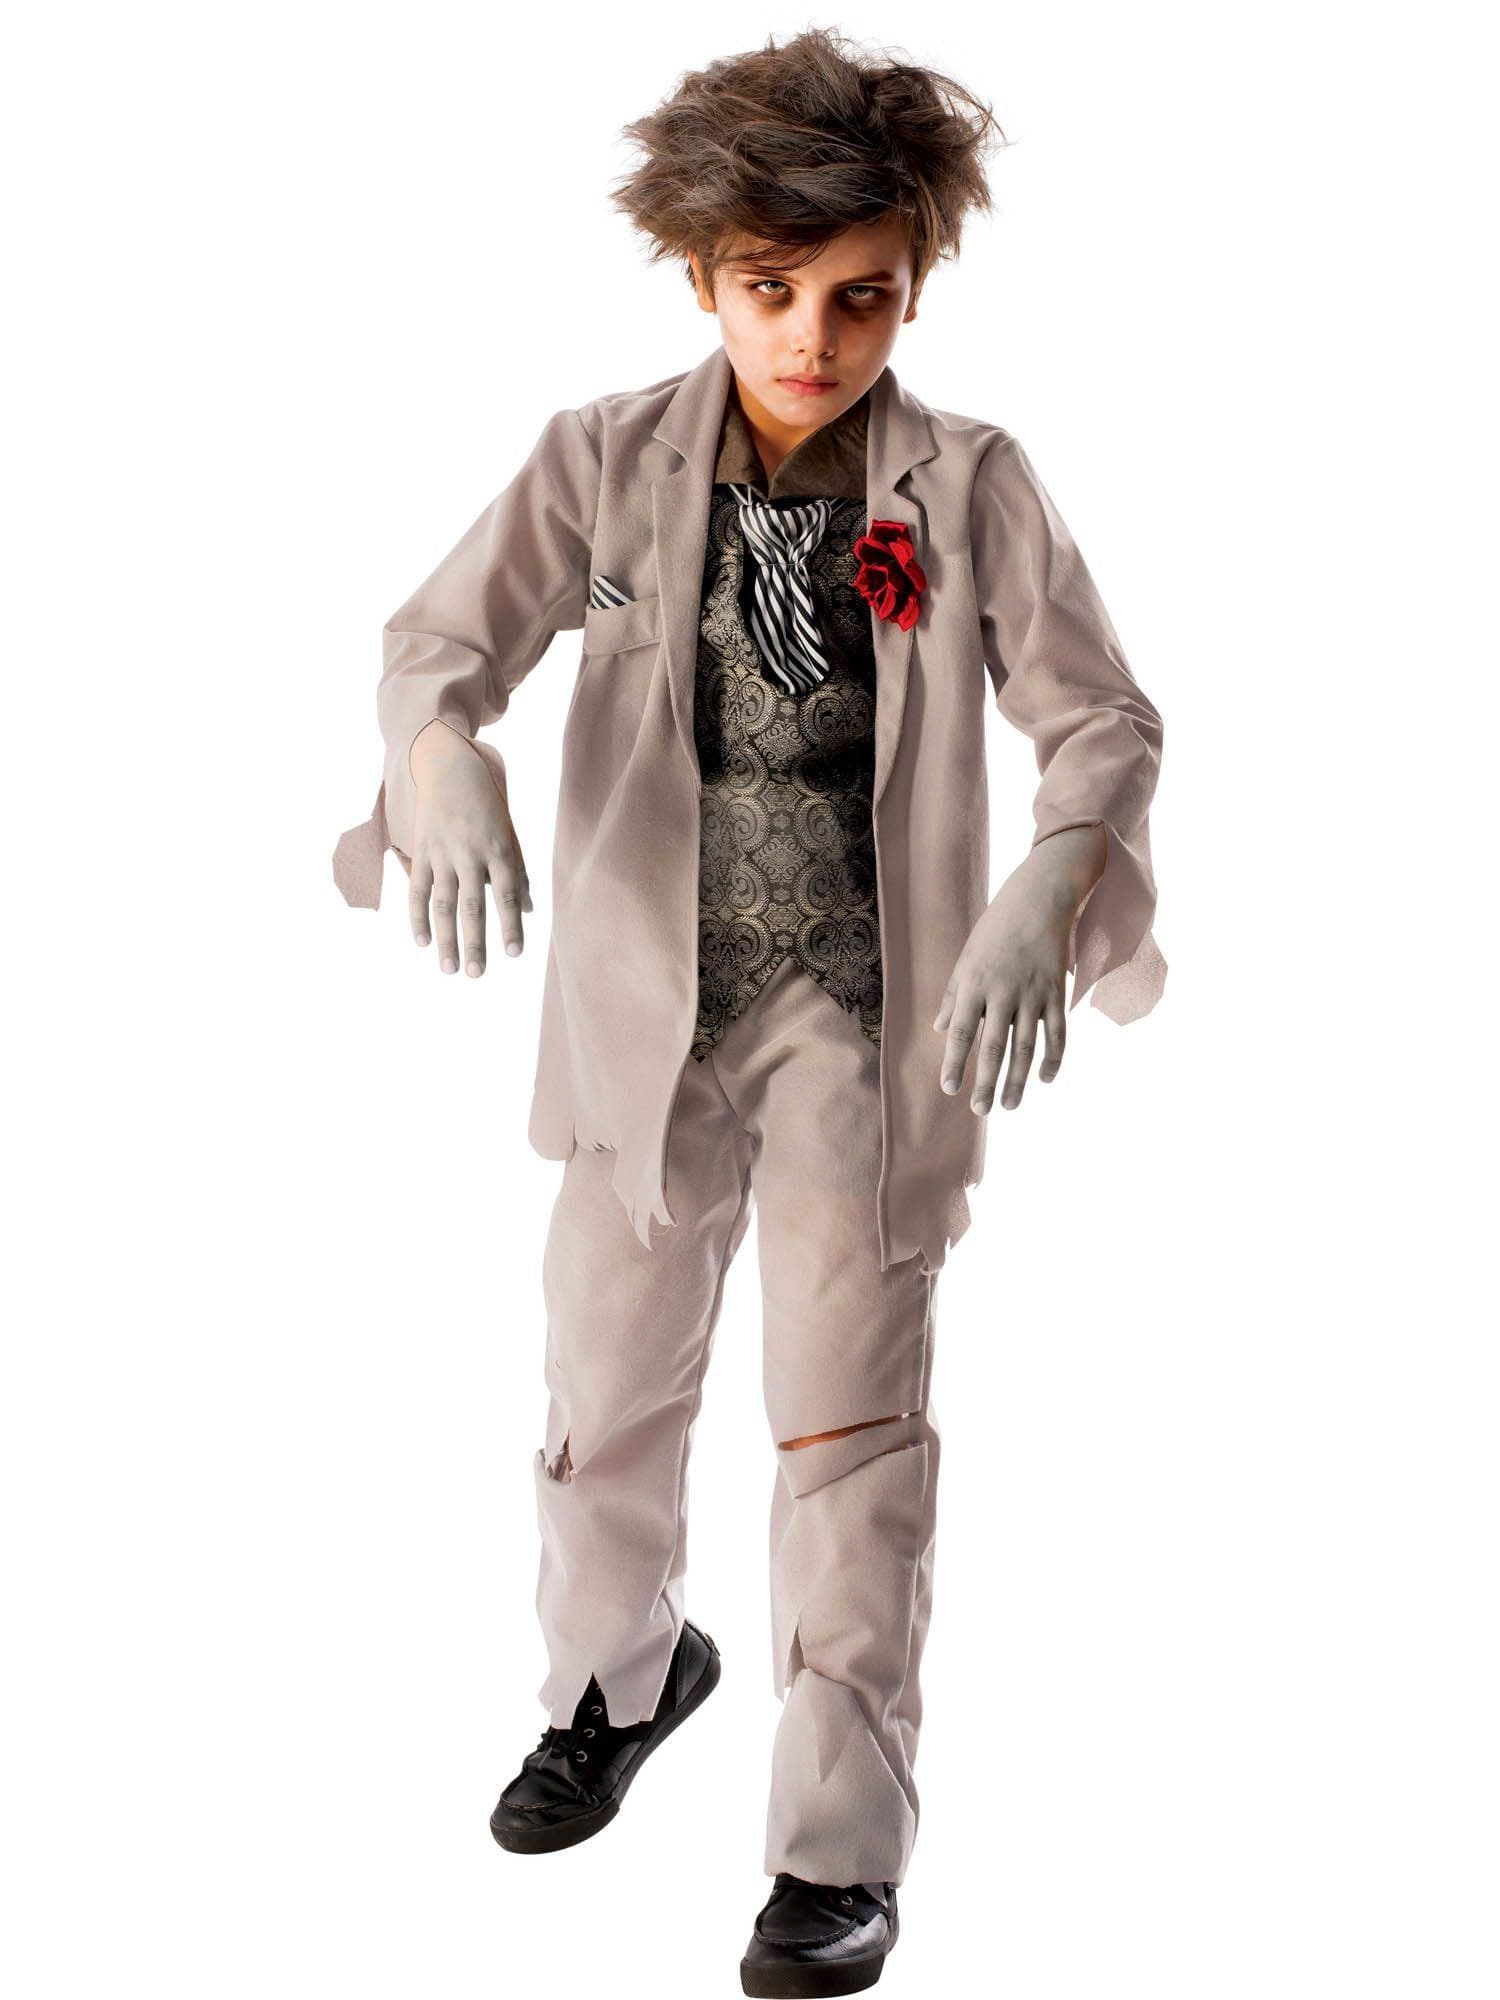 Kids Ghost Groom Costume - costumes.com